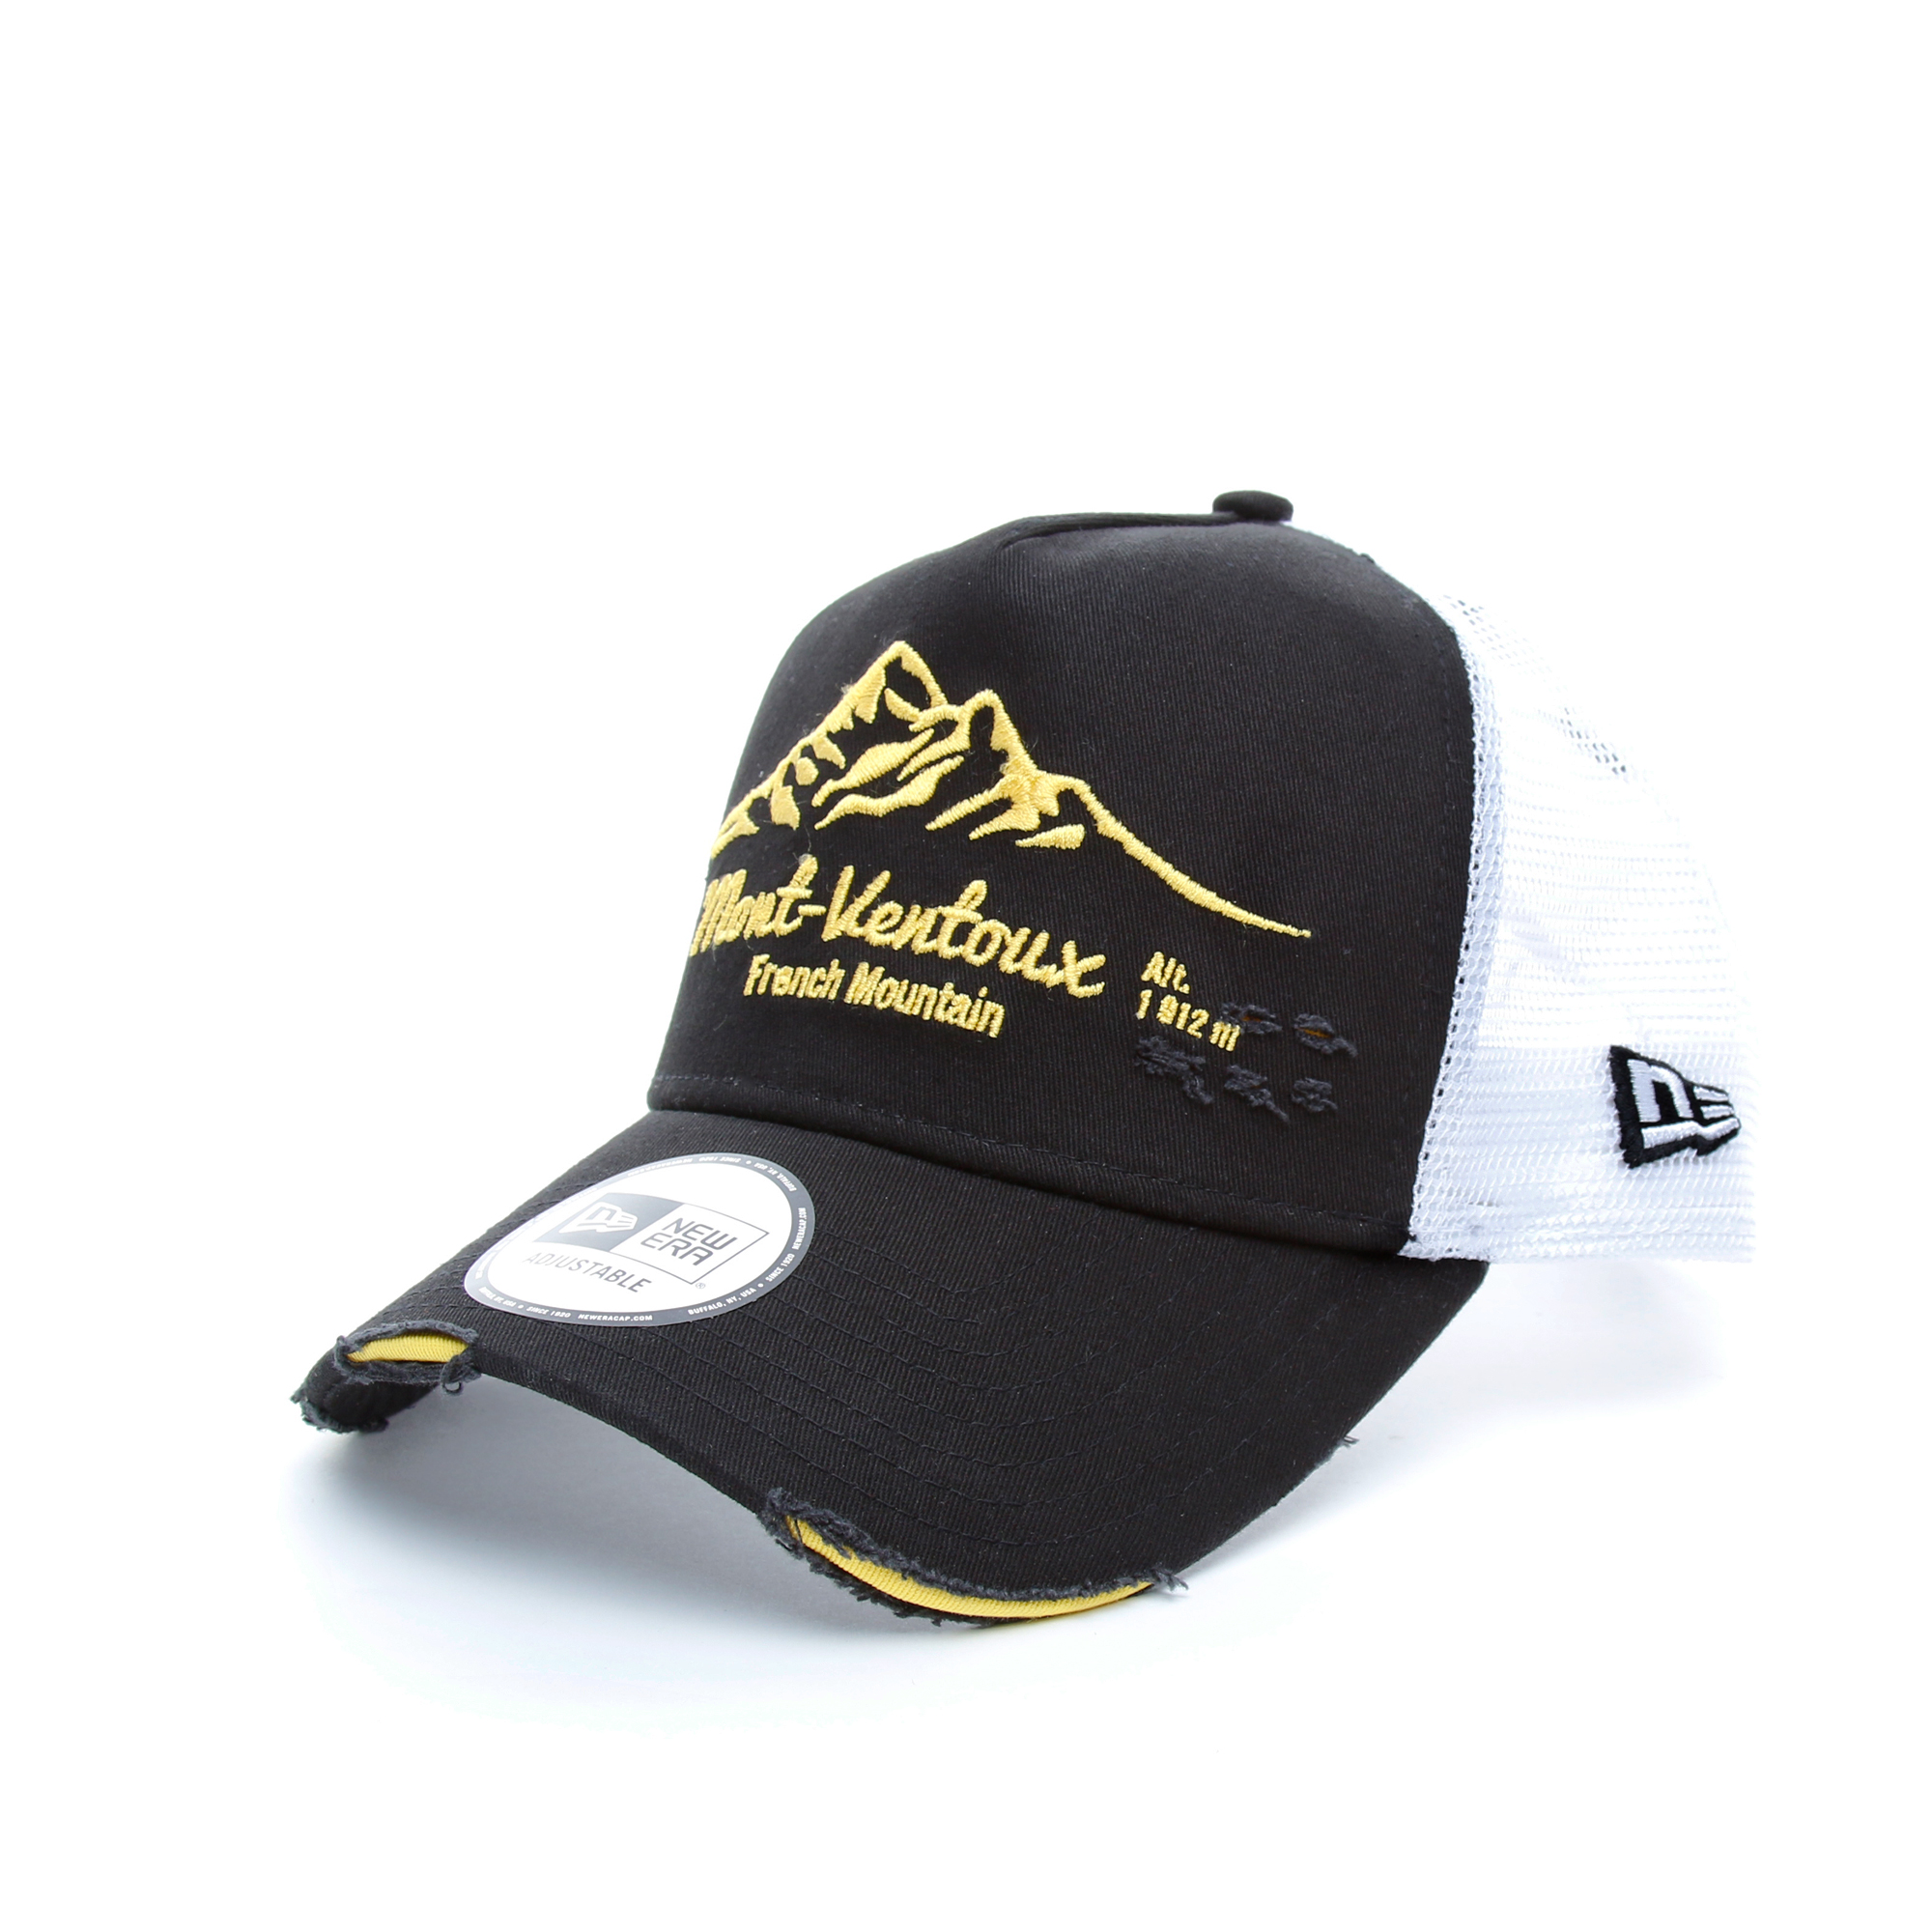 New Era Tour De France Mount-Ventoux Worn Siyah Unisex Şapka